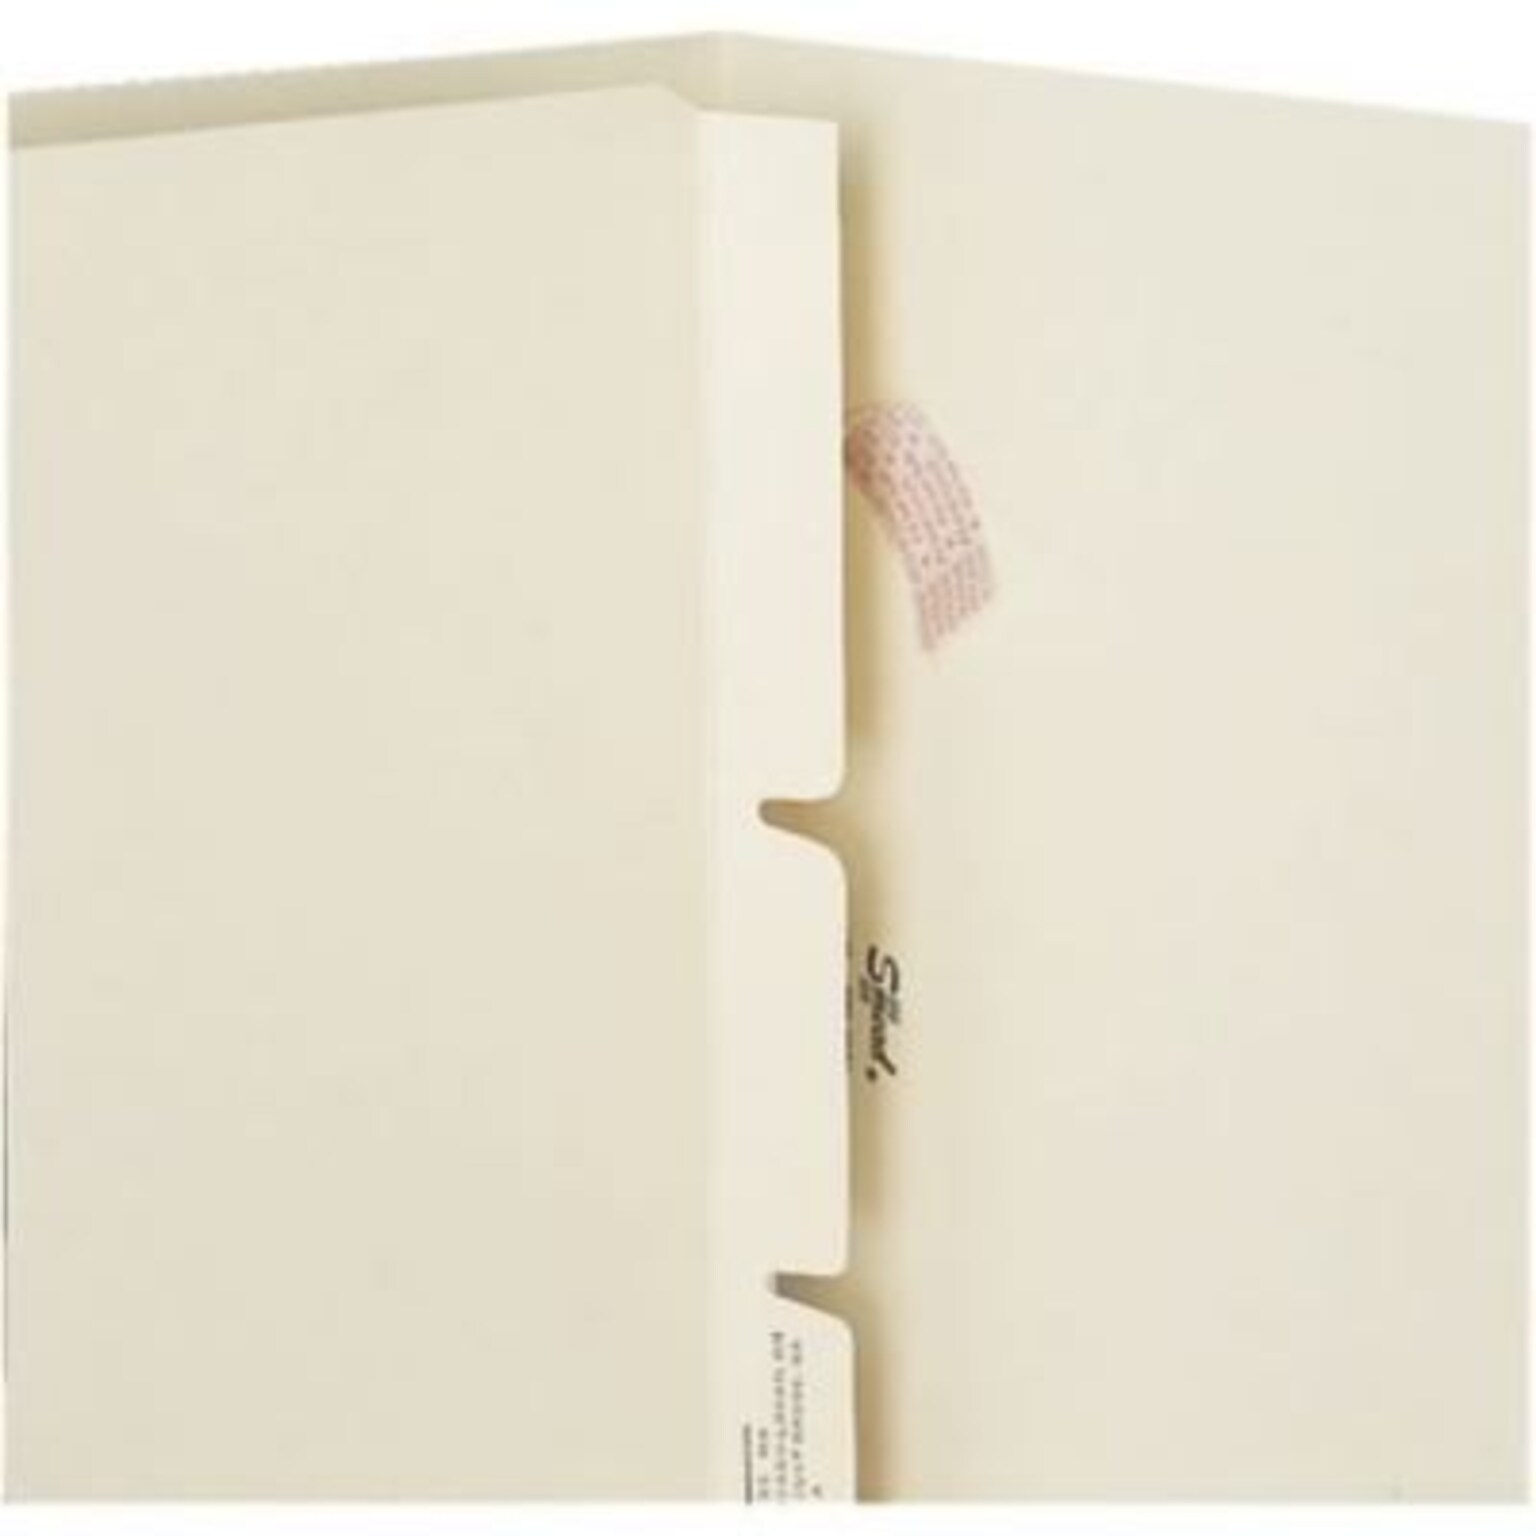 Medical Arts Press® File Folder Dividers, Standard Side-Flap with 2 Fastener on Top, 100/Box (52411)